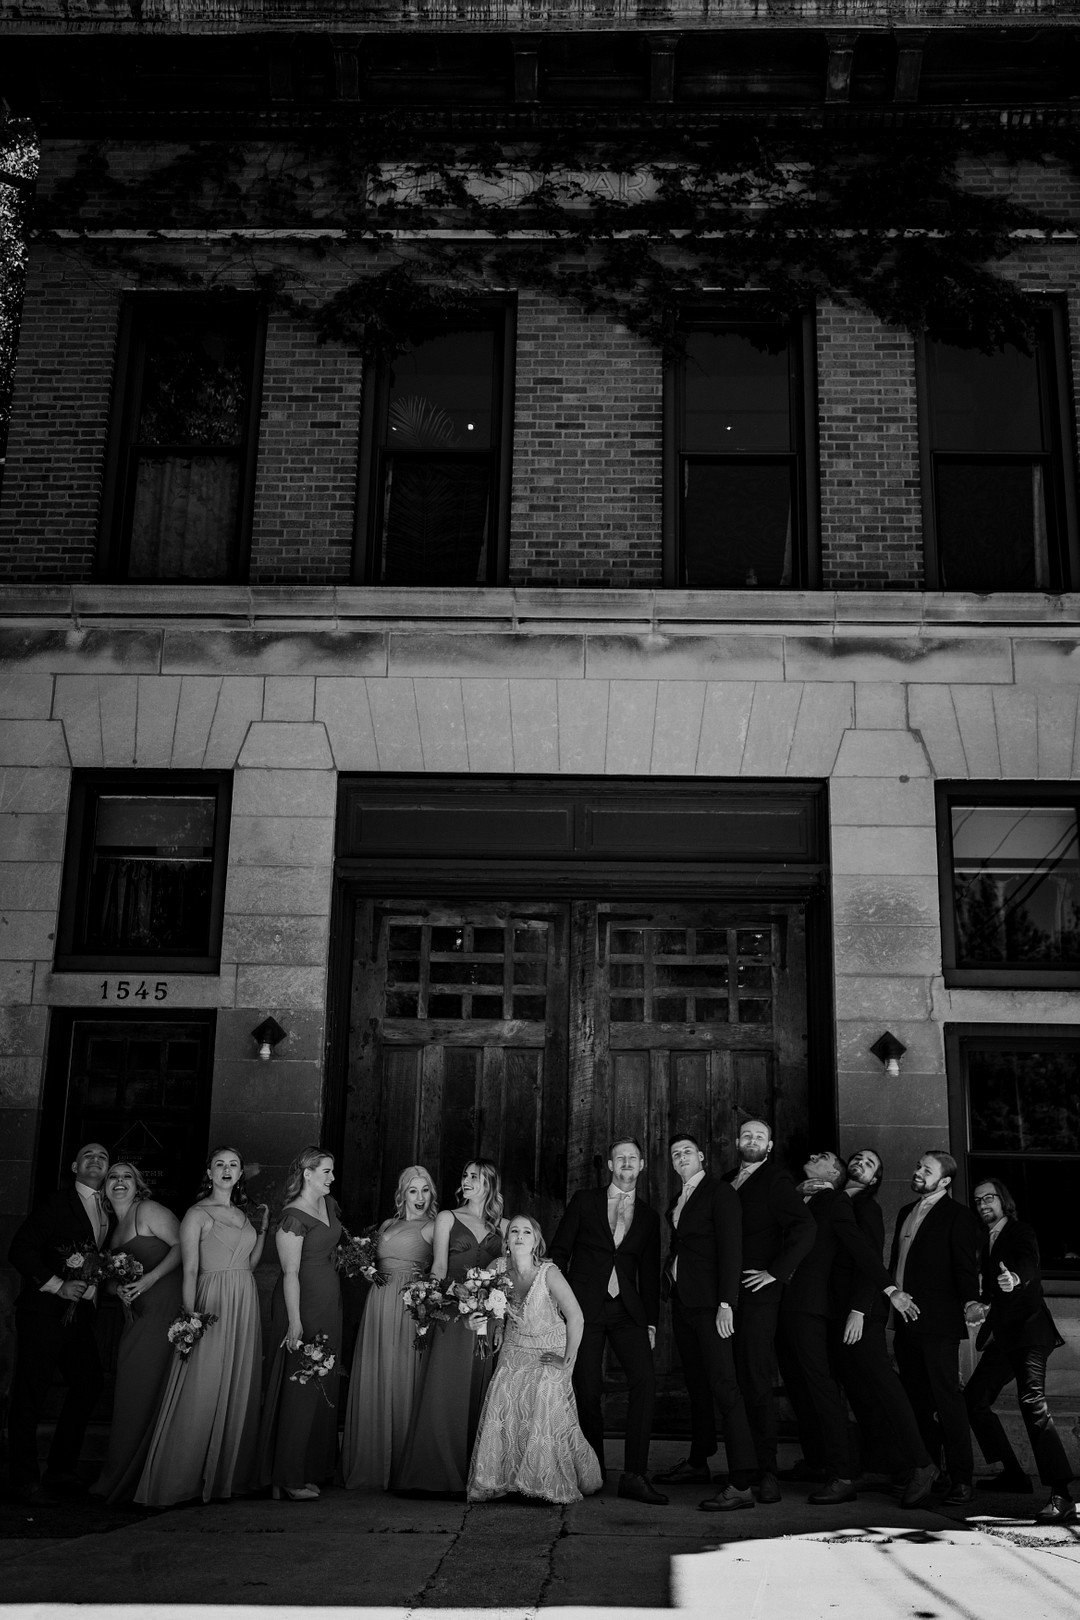 Lindstrom_Smigielski_Aspen Avenue_Aspen-Avenue-Chicago-Wedding-Photograper-Firehouse-Venue-Grace-and-Ivory-Dress-FAV-95_low.jpg